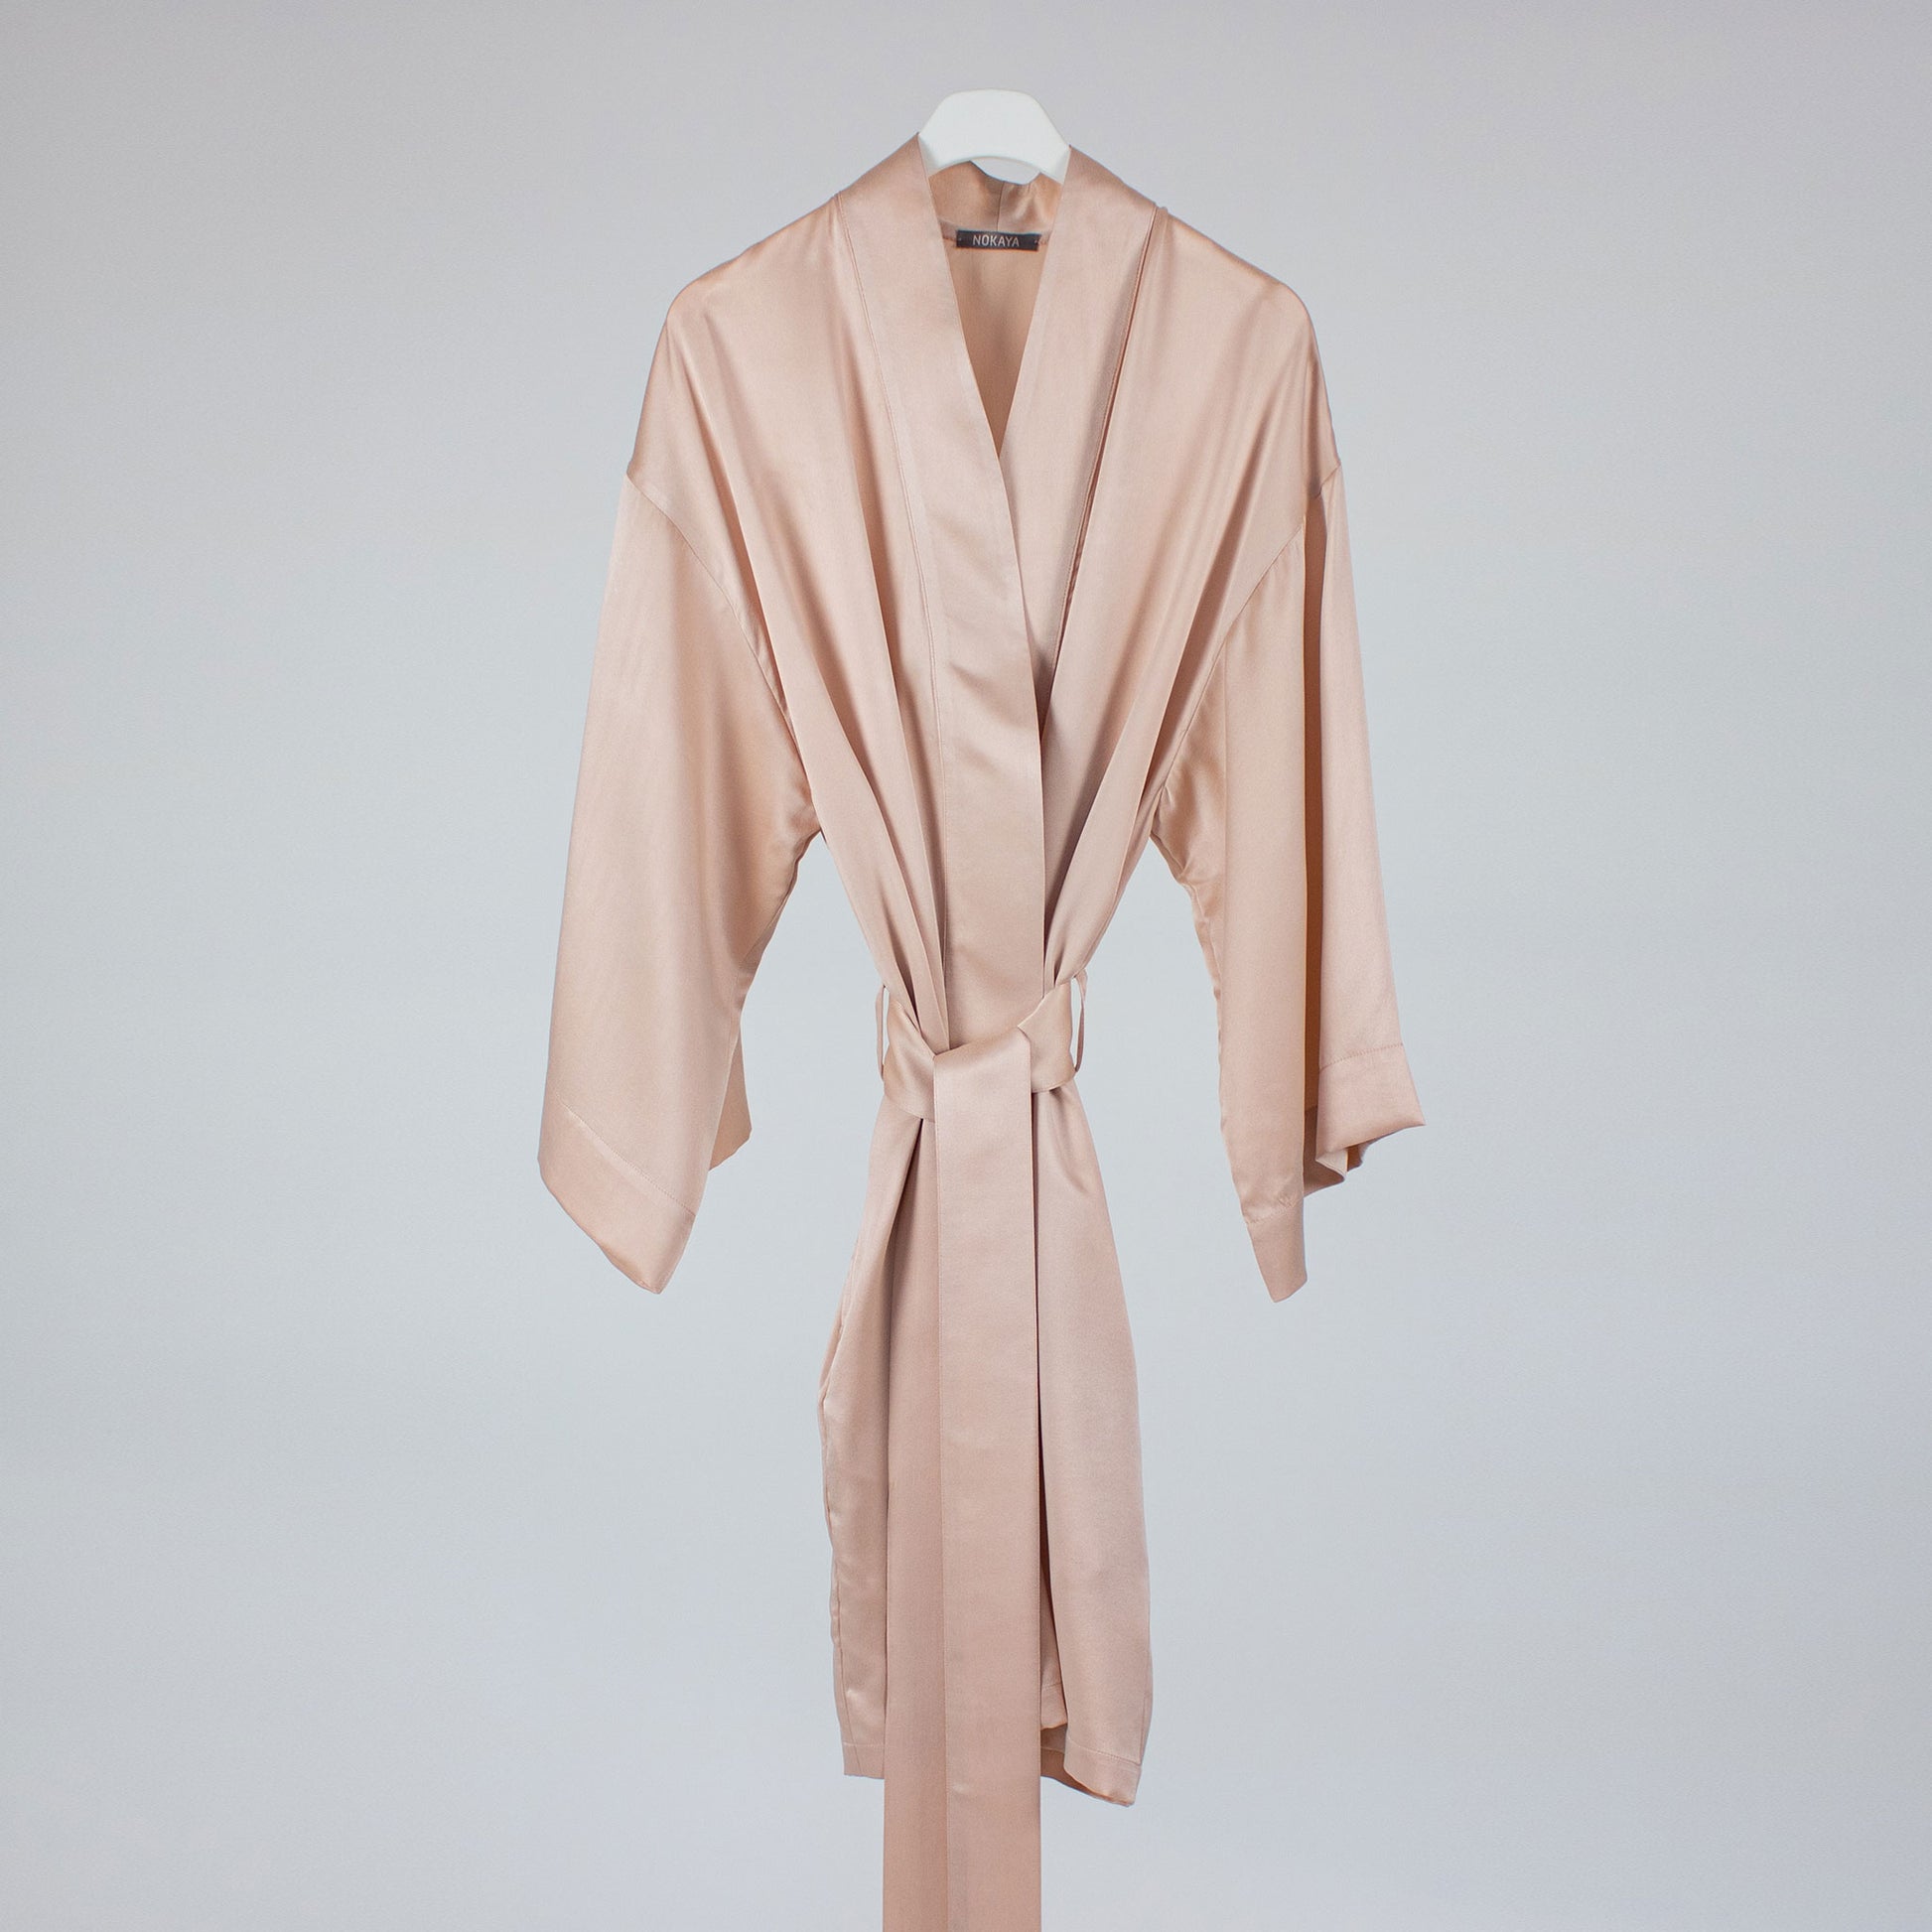 Pink silk robe on hanger